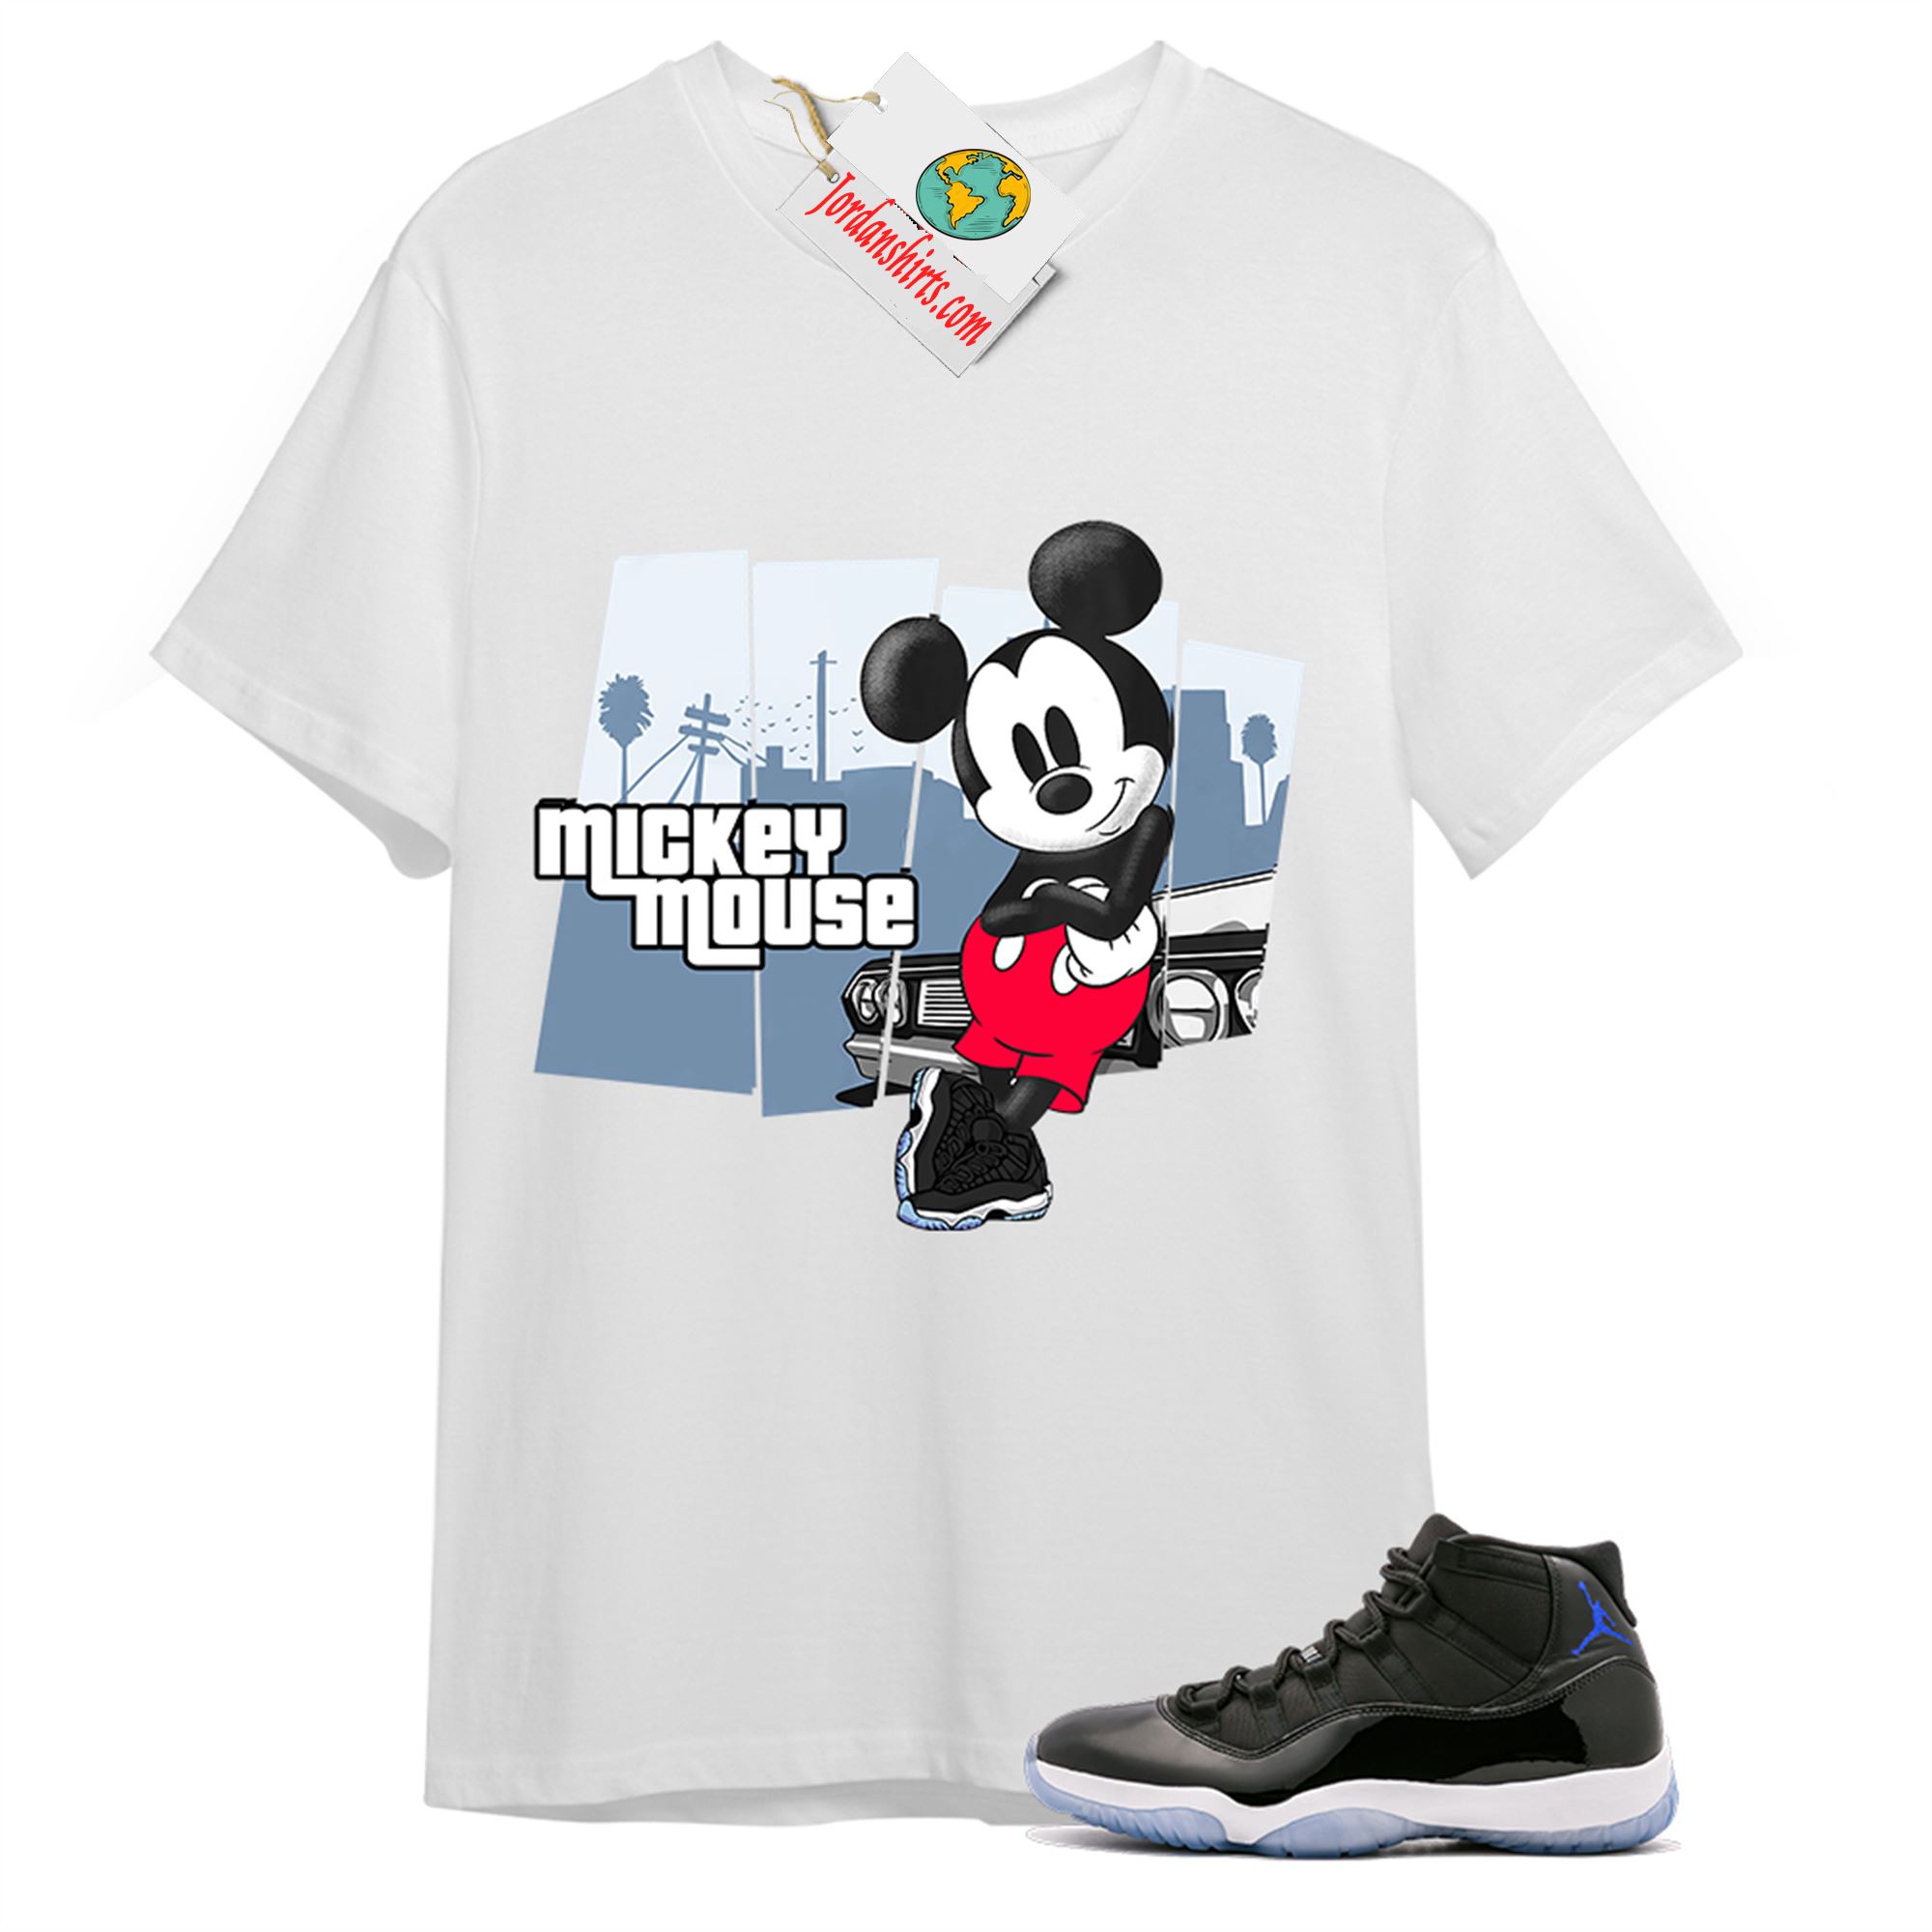 Jordan 11 Shirt, Mickey Gta White T-shirt Air Jordan 11 Space Jam 11s Full Size Up To 5xl